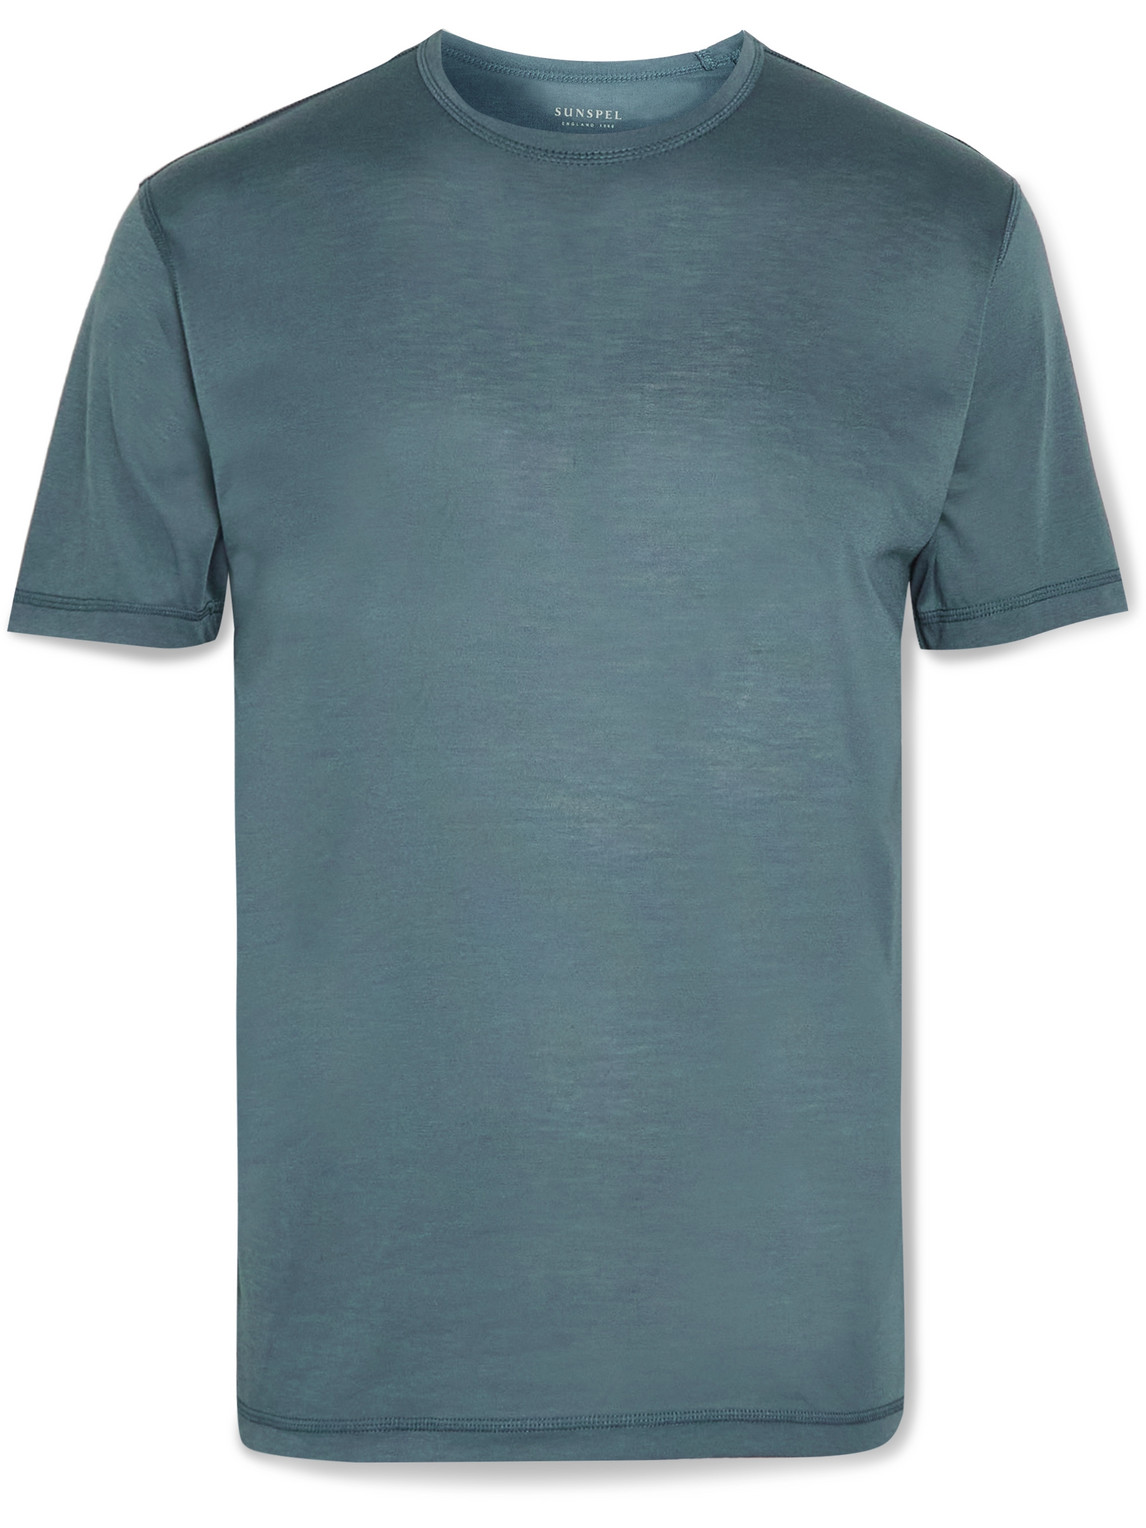 Sunspel Dri-release Active Jersey T-shirt In Blue